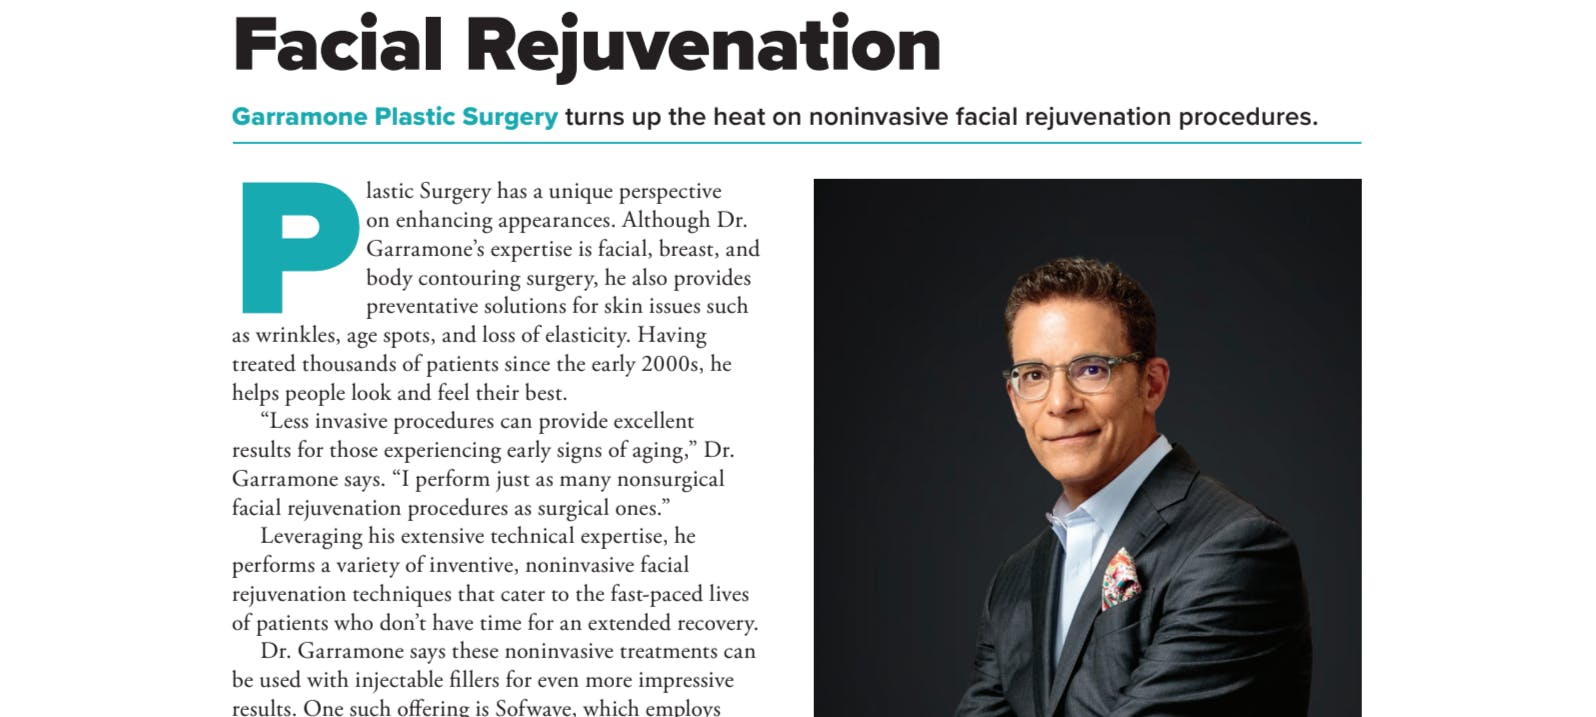 Facial Rejuvenation, Garramone Plastic Surgery turns up the heat on noninvasive facial rejuvenation procedures.